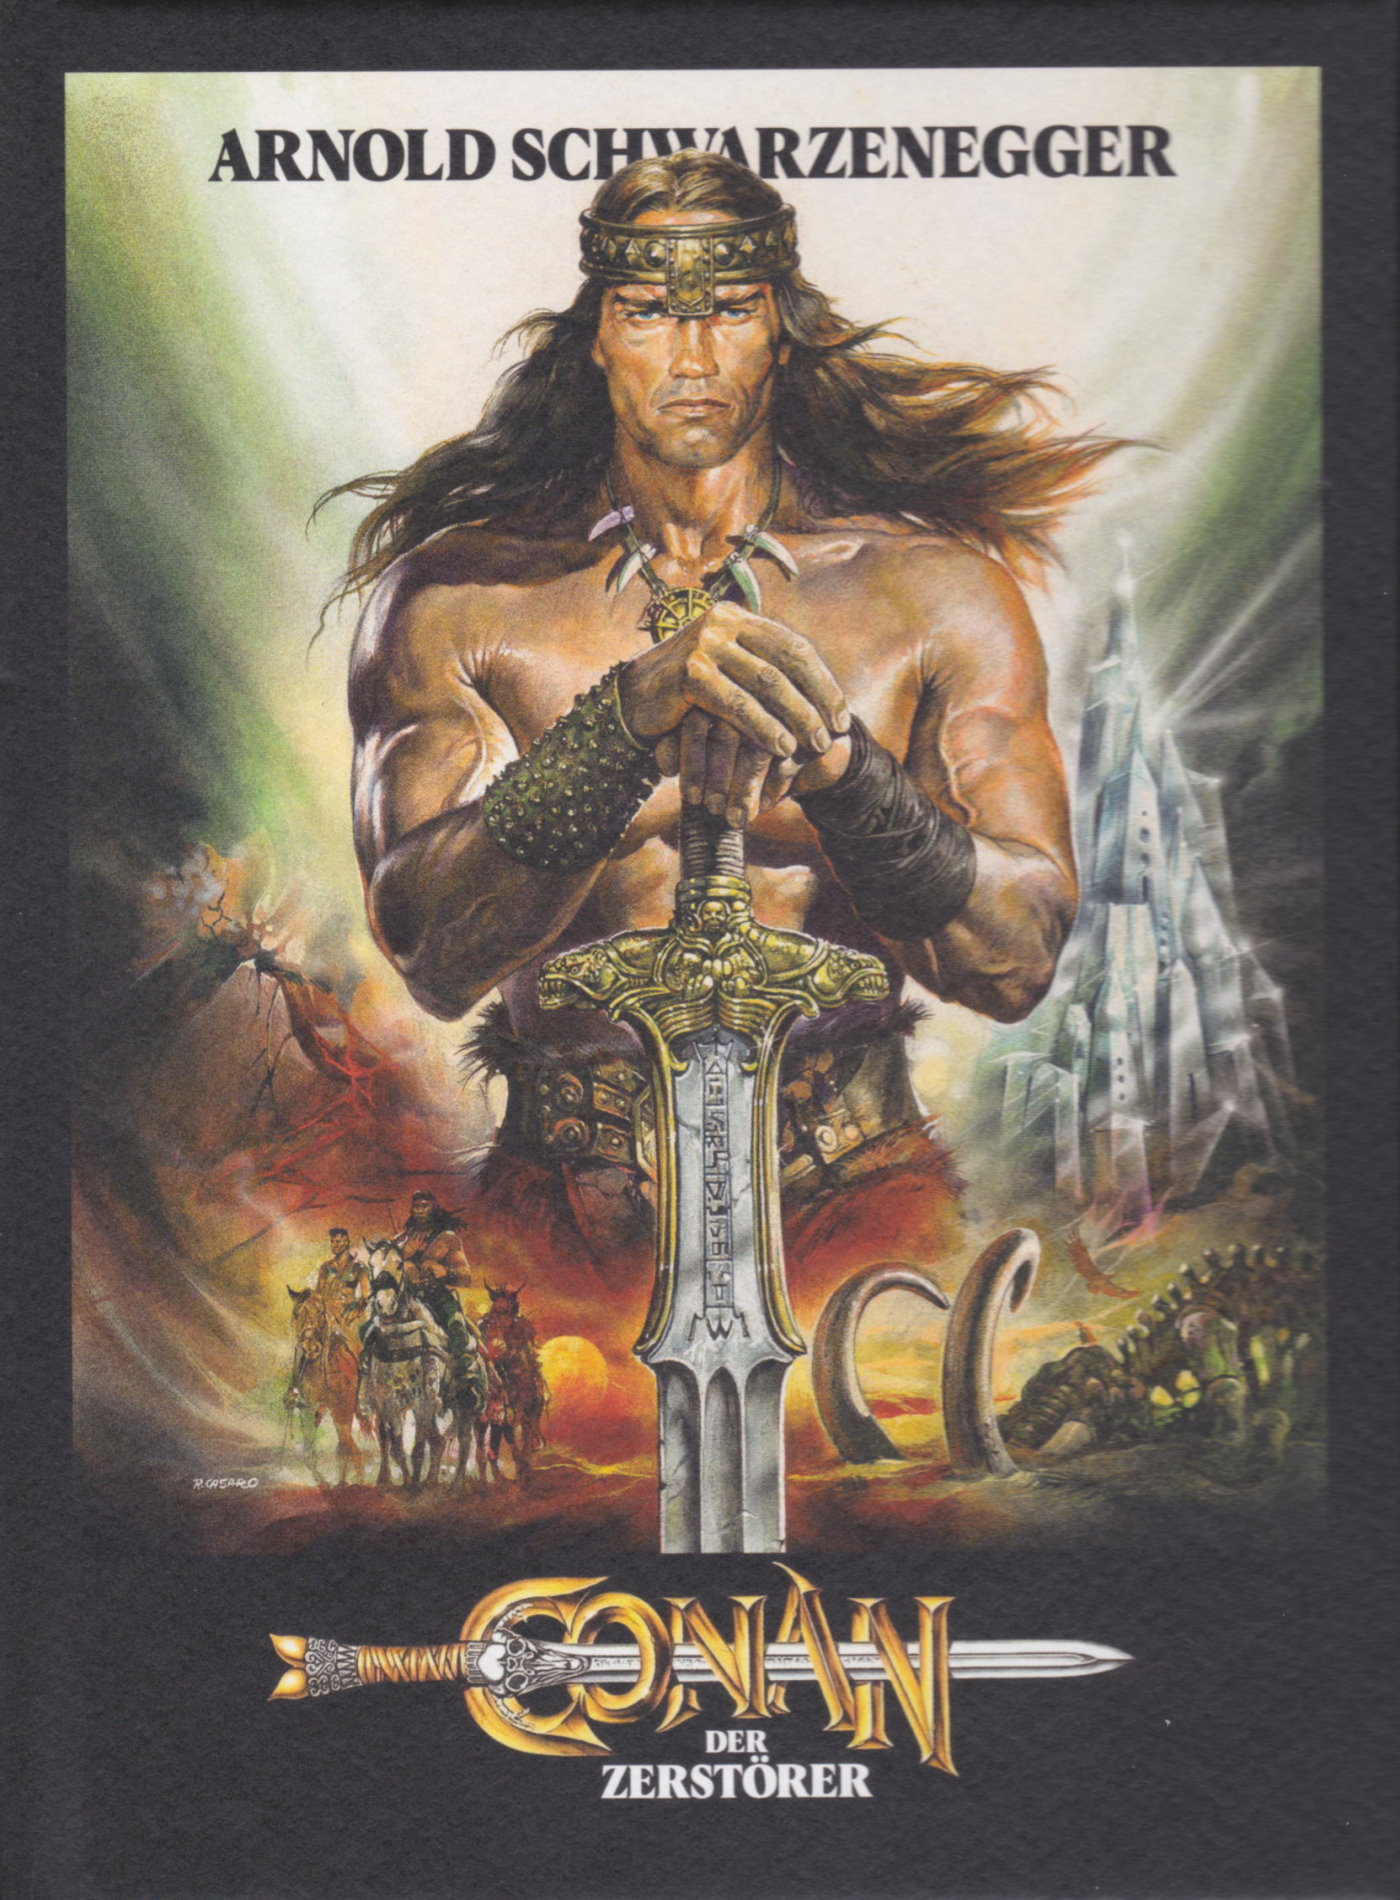 Cover - Conan - Der Zerstörer.jpg